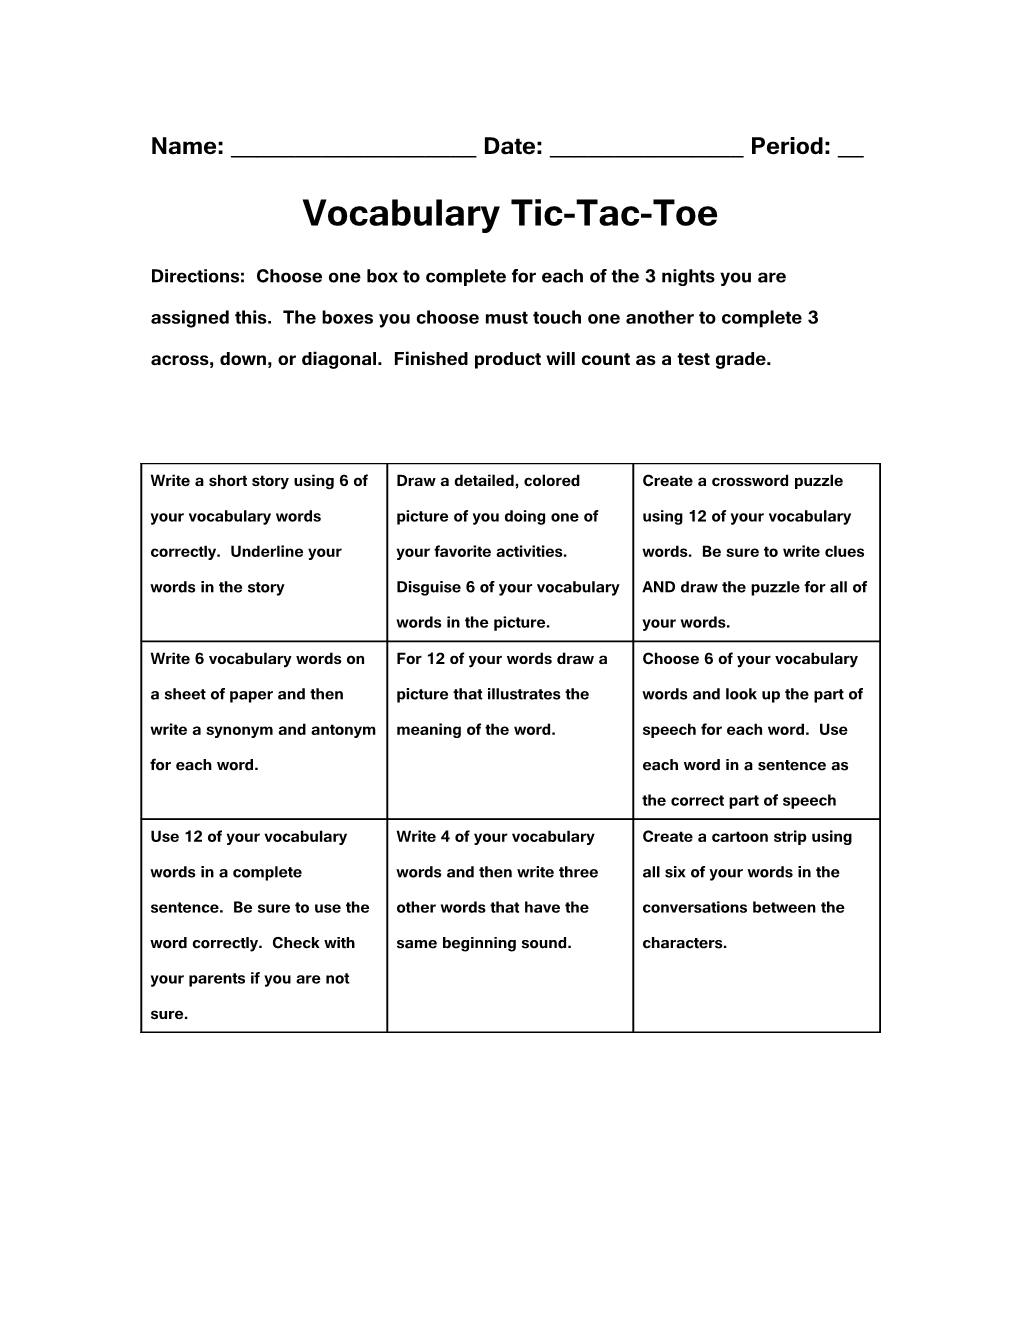 Vocabulary Tic-Tac-Toe s1